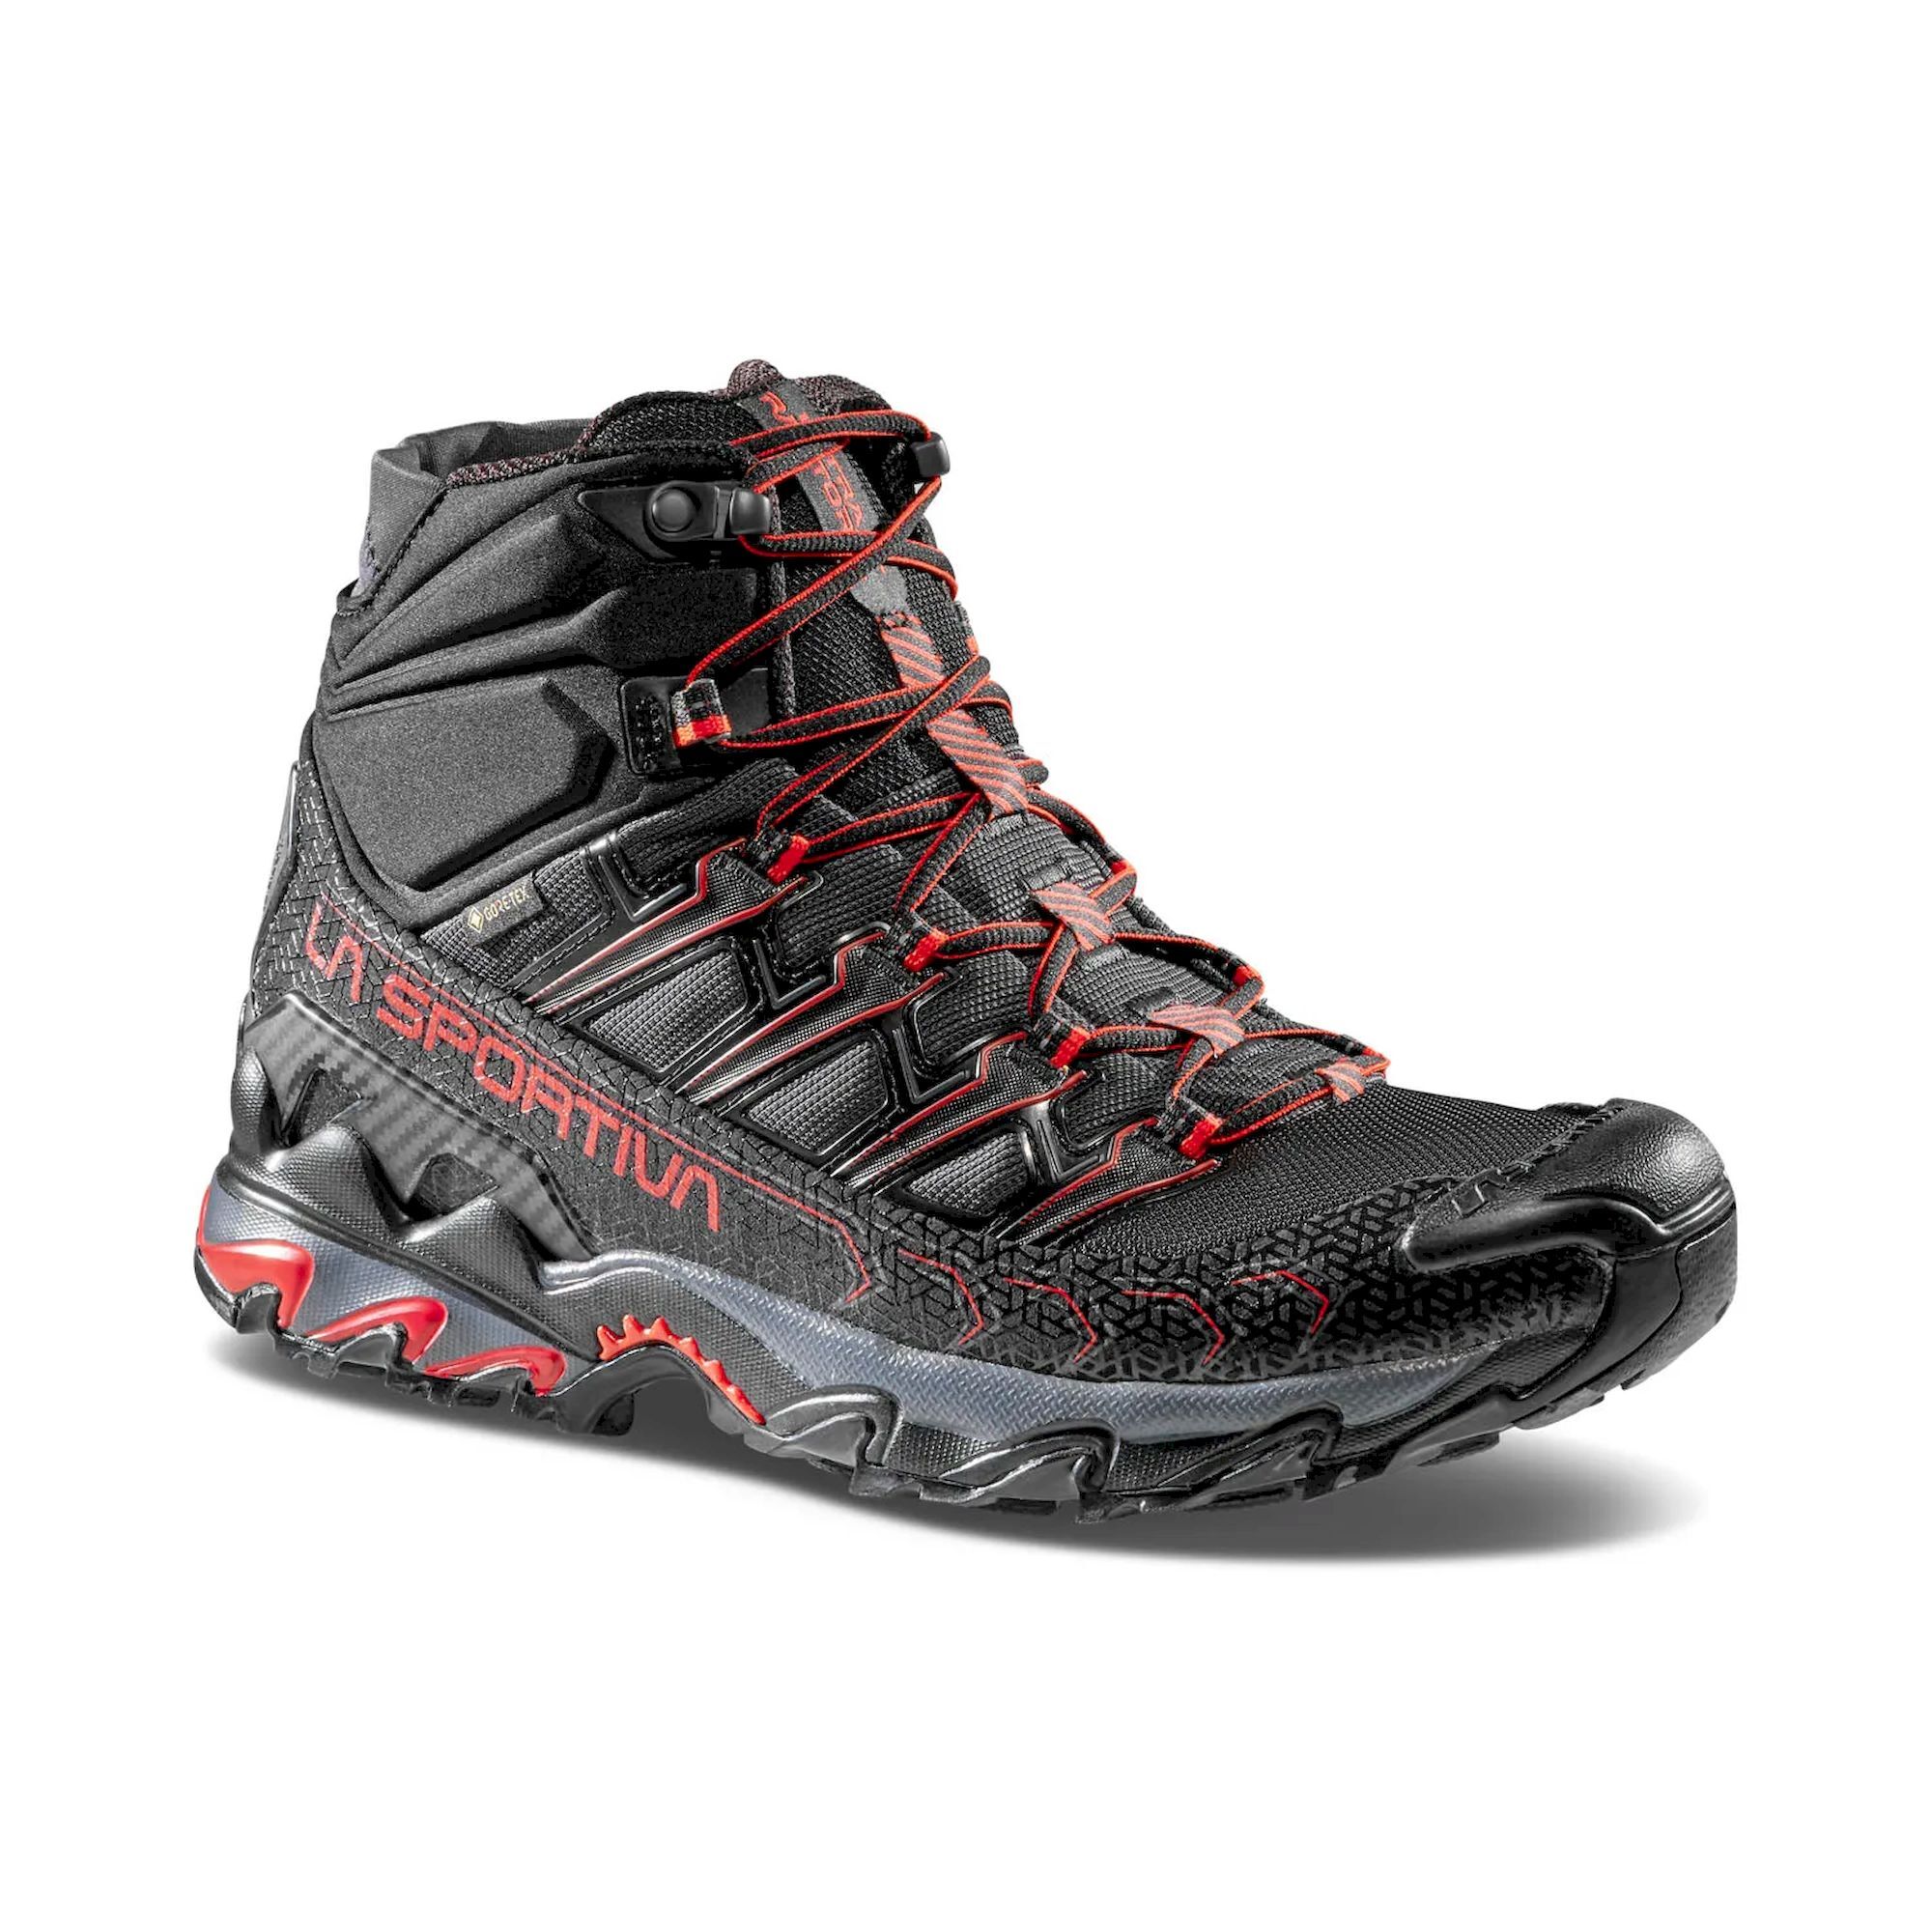 La Sportiva Ultra Raptor II Mid GTX - Hiking boots - Men's